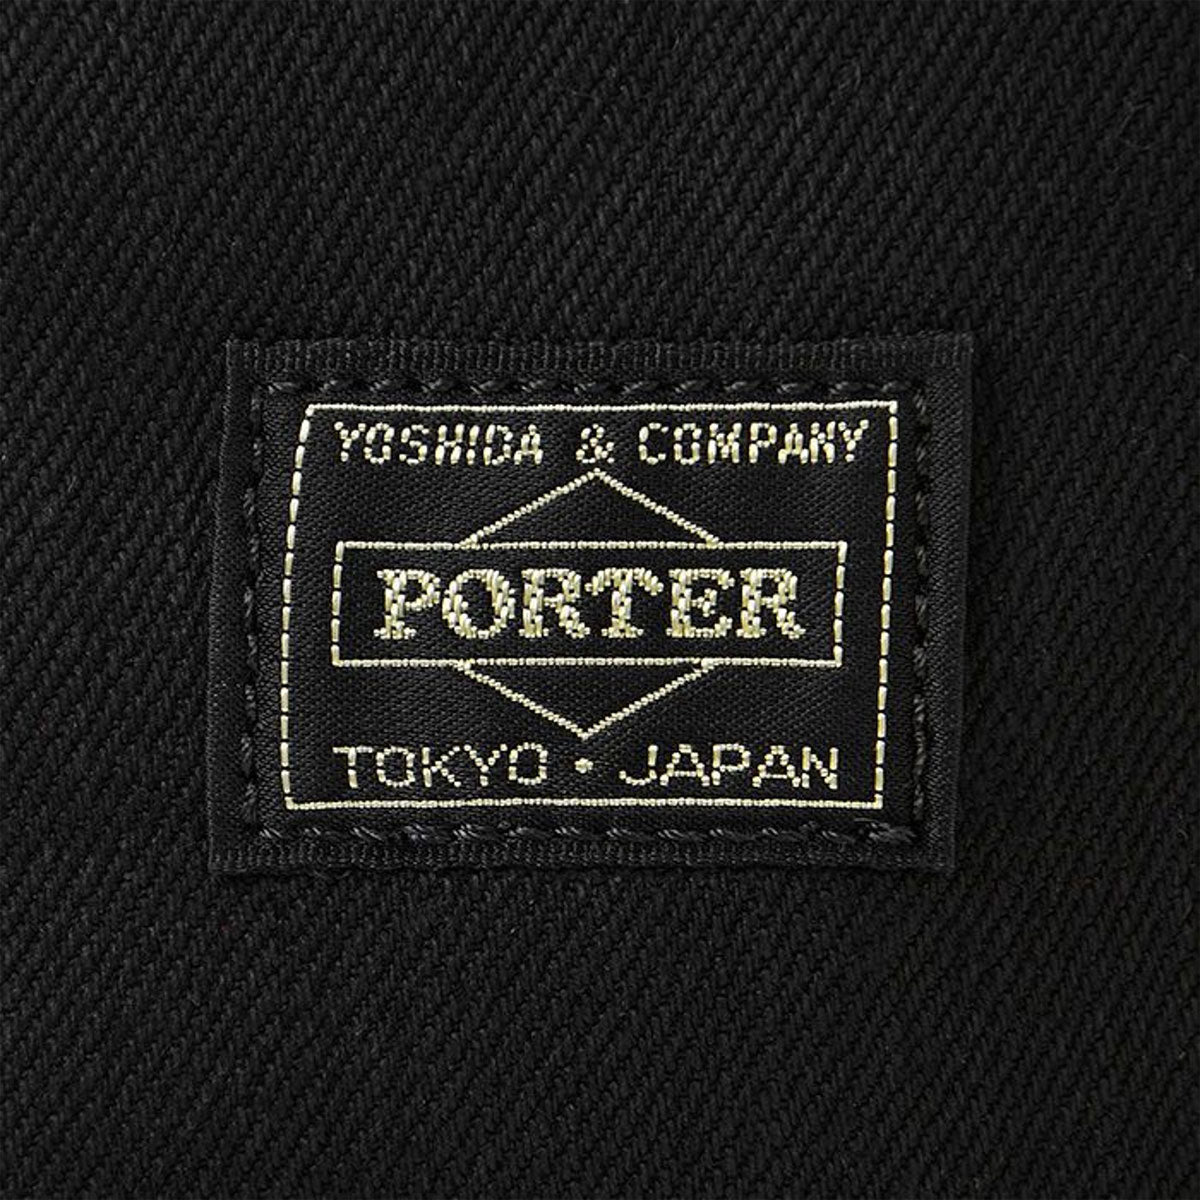 Porter by Yoshida Noir Tote Bag Large (Schwarz)  - Allike Store